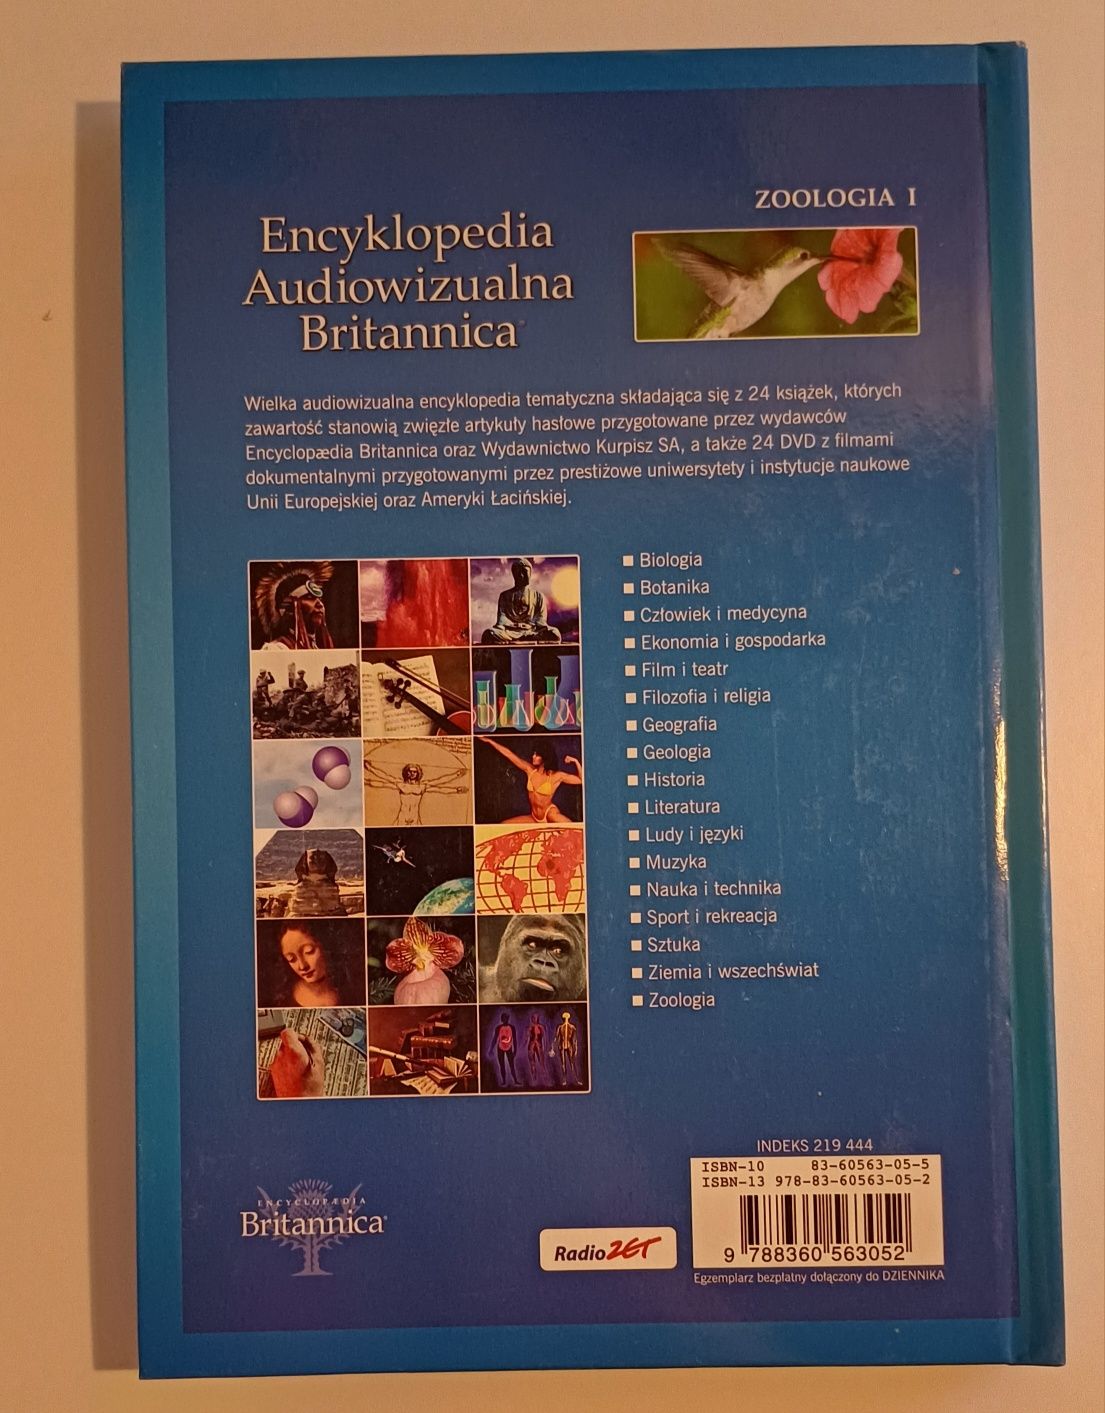 Encyklopedia audiowizualna Britannica Zoologia 1